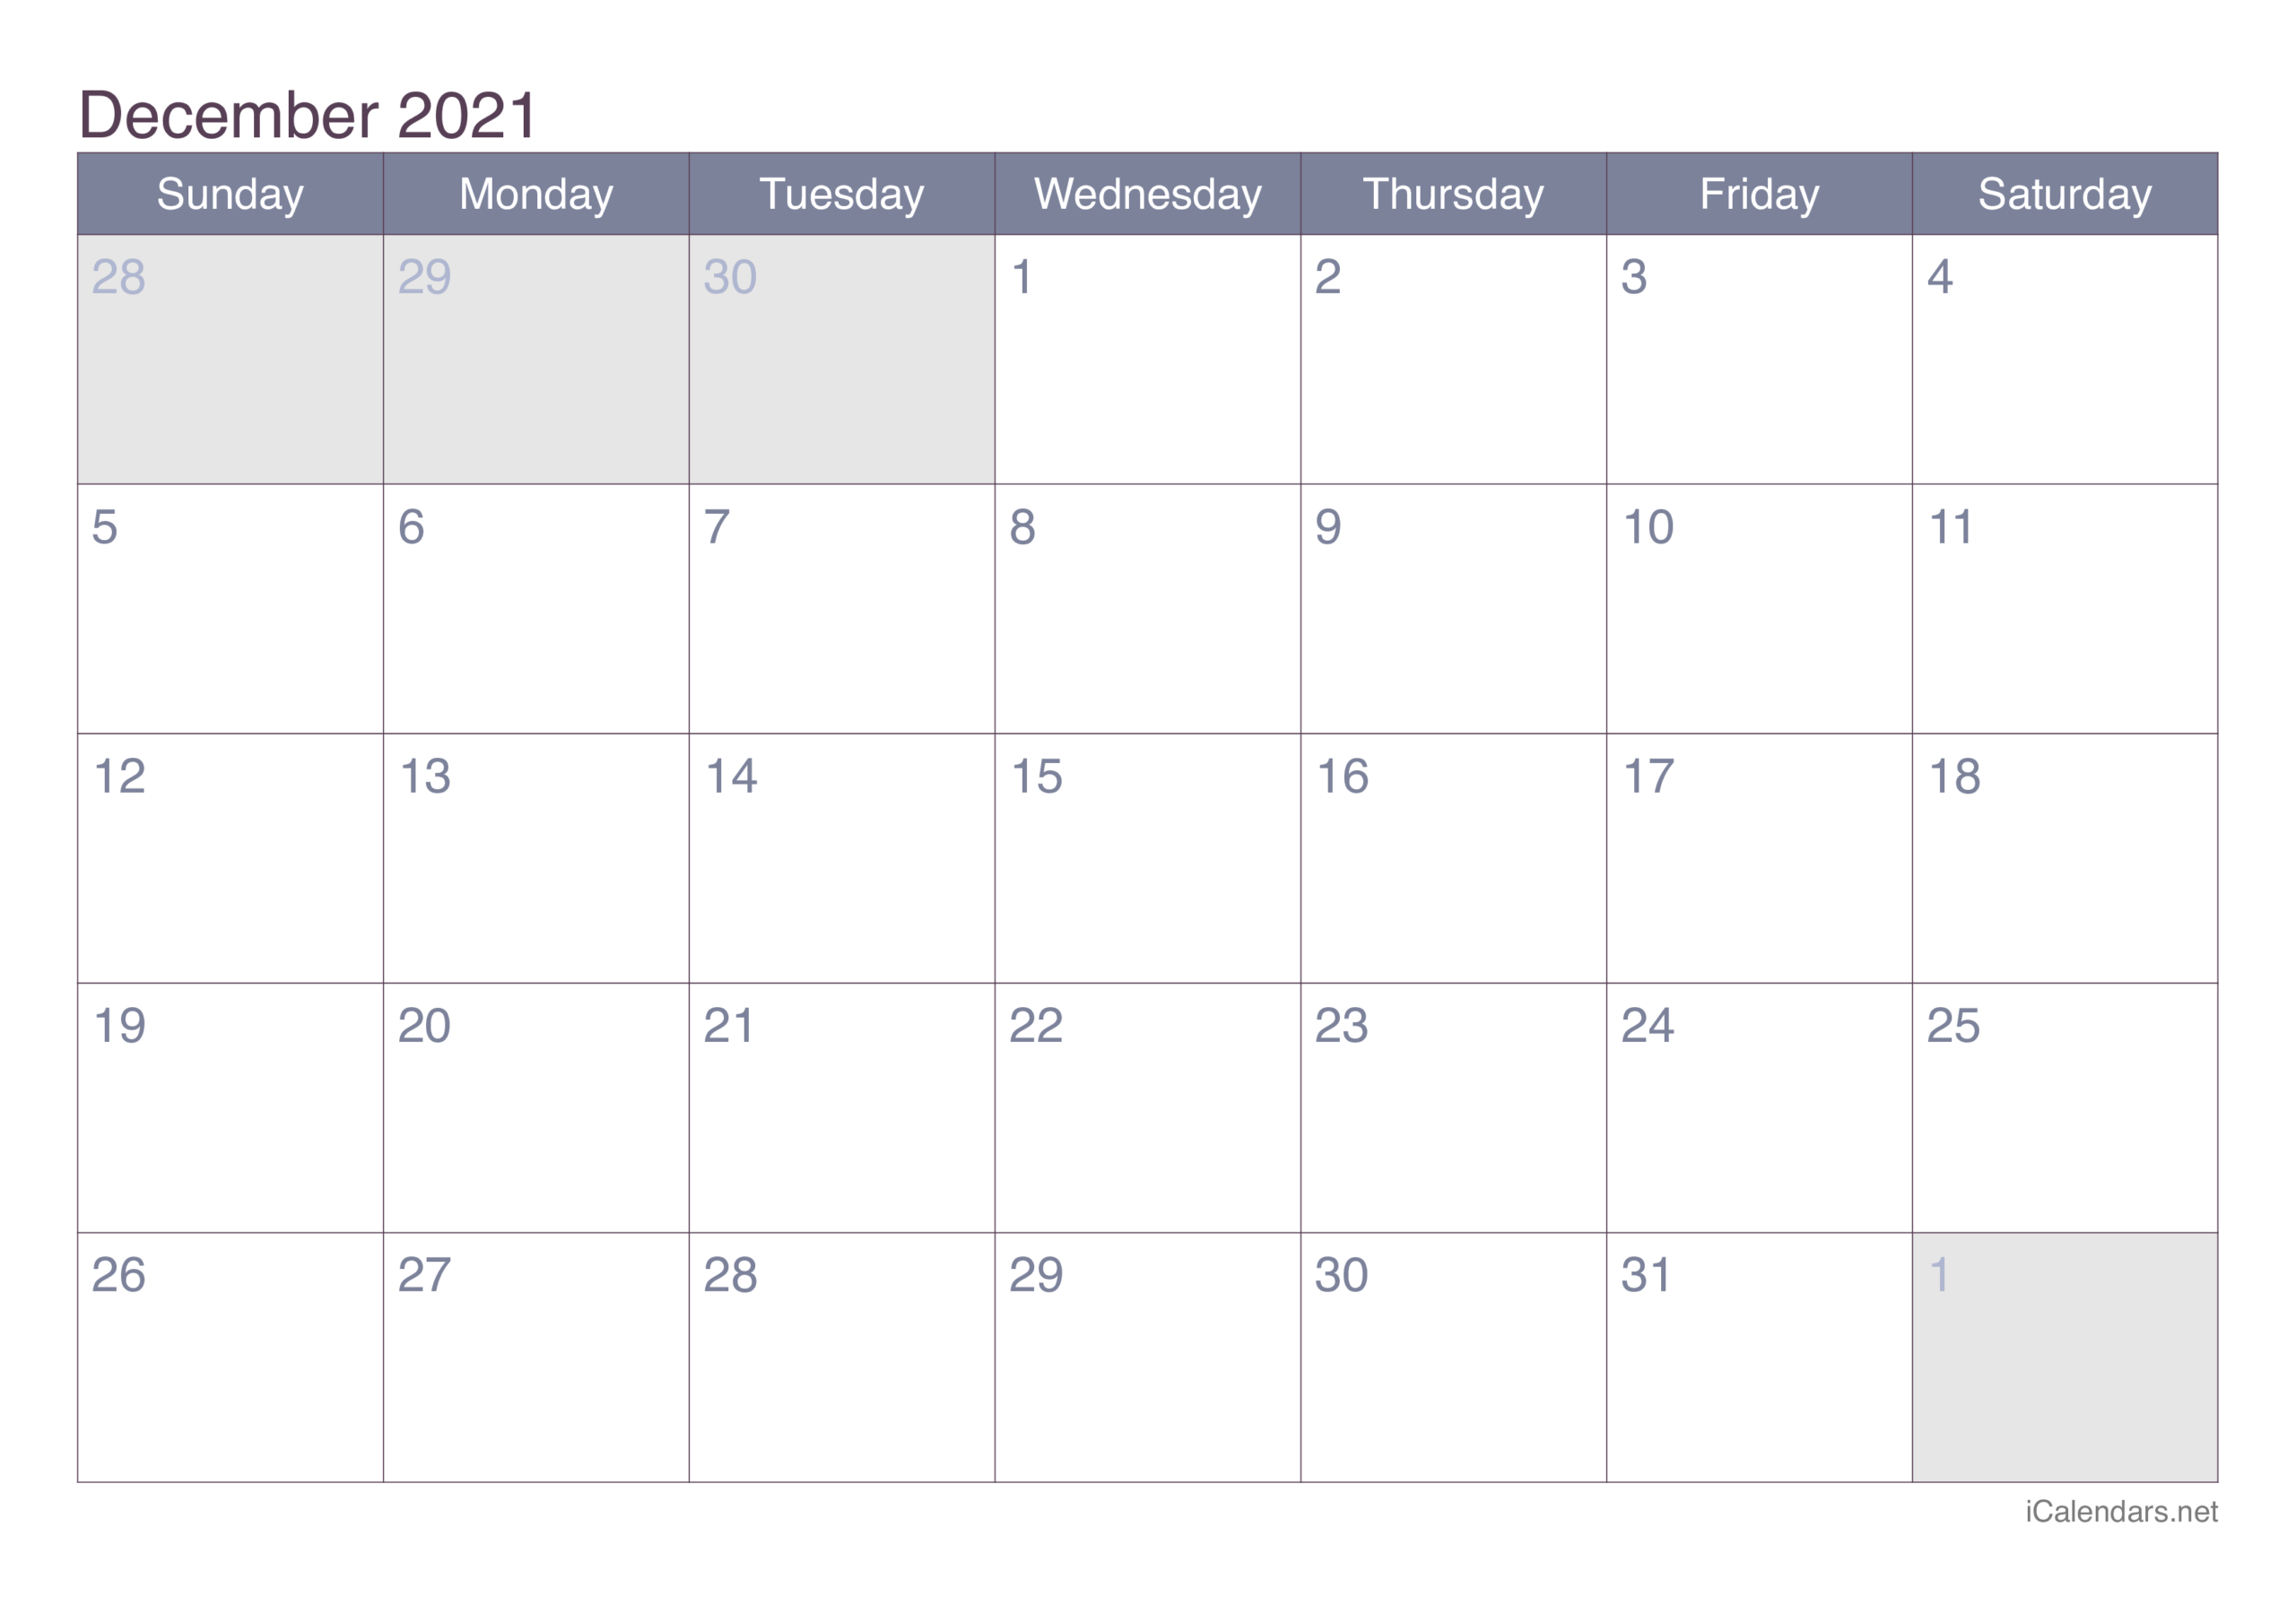 December 2021 Printable Calendar - Icalendars